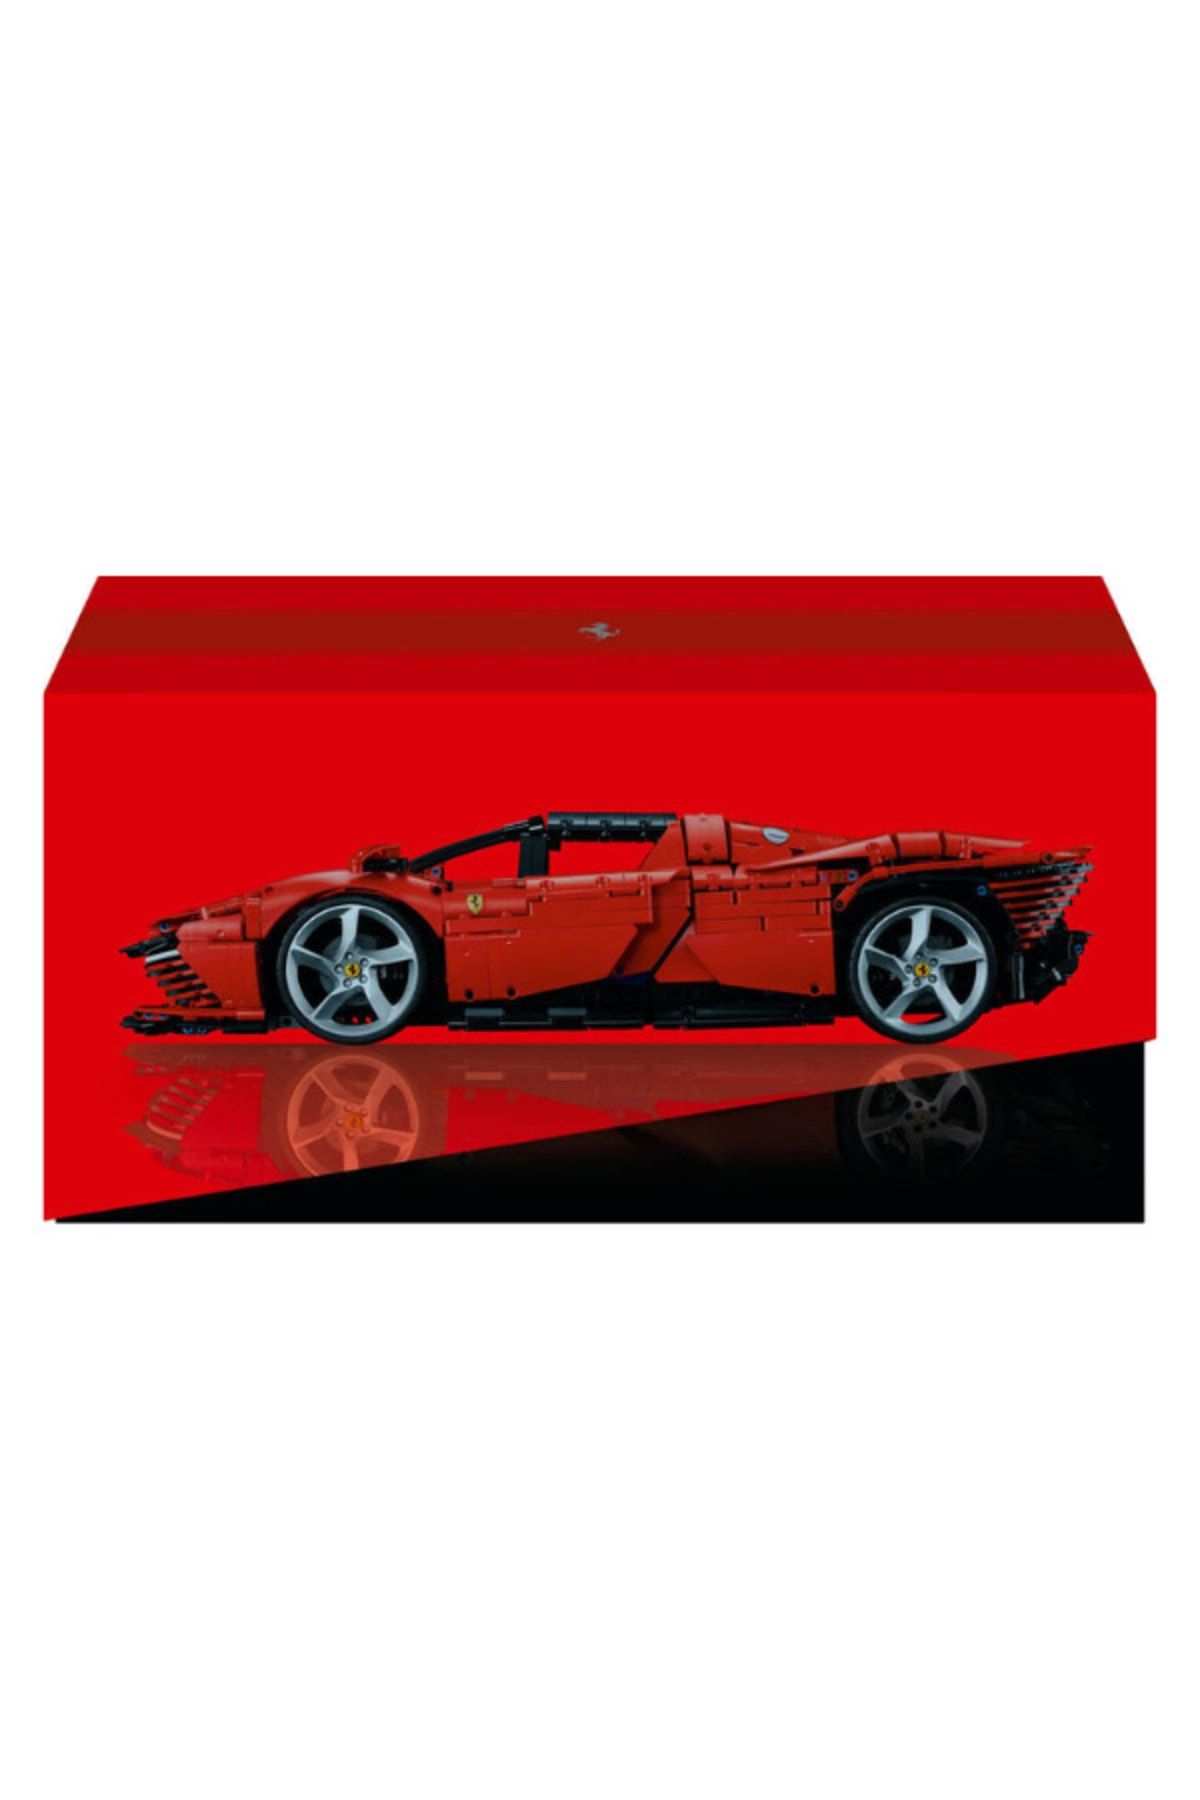 LEGO لگو Technic Ferrari Daytona Sp3 42143 تعداد قطعات: 3778